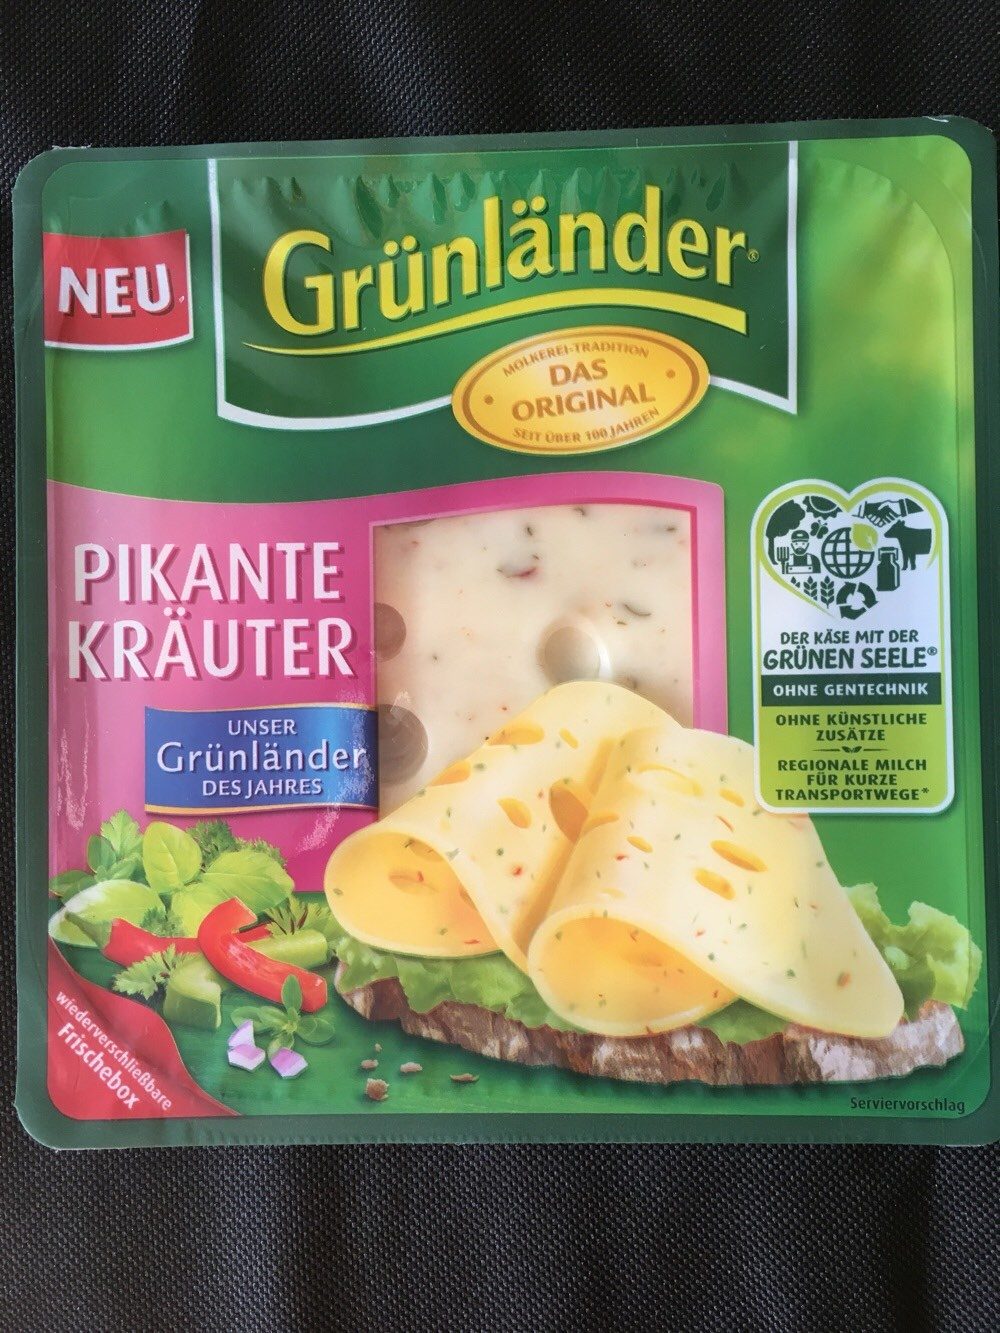 Grünländer Pikante Kraüter - Product - de